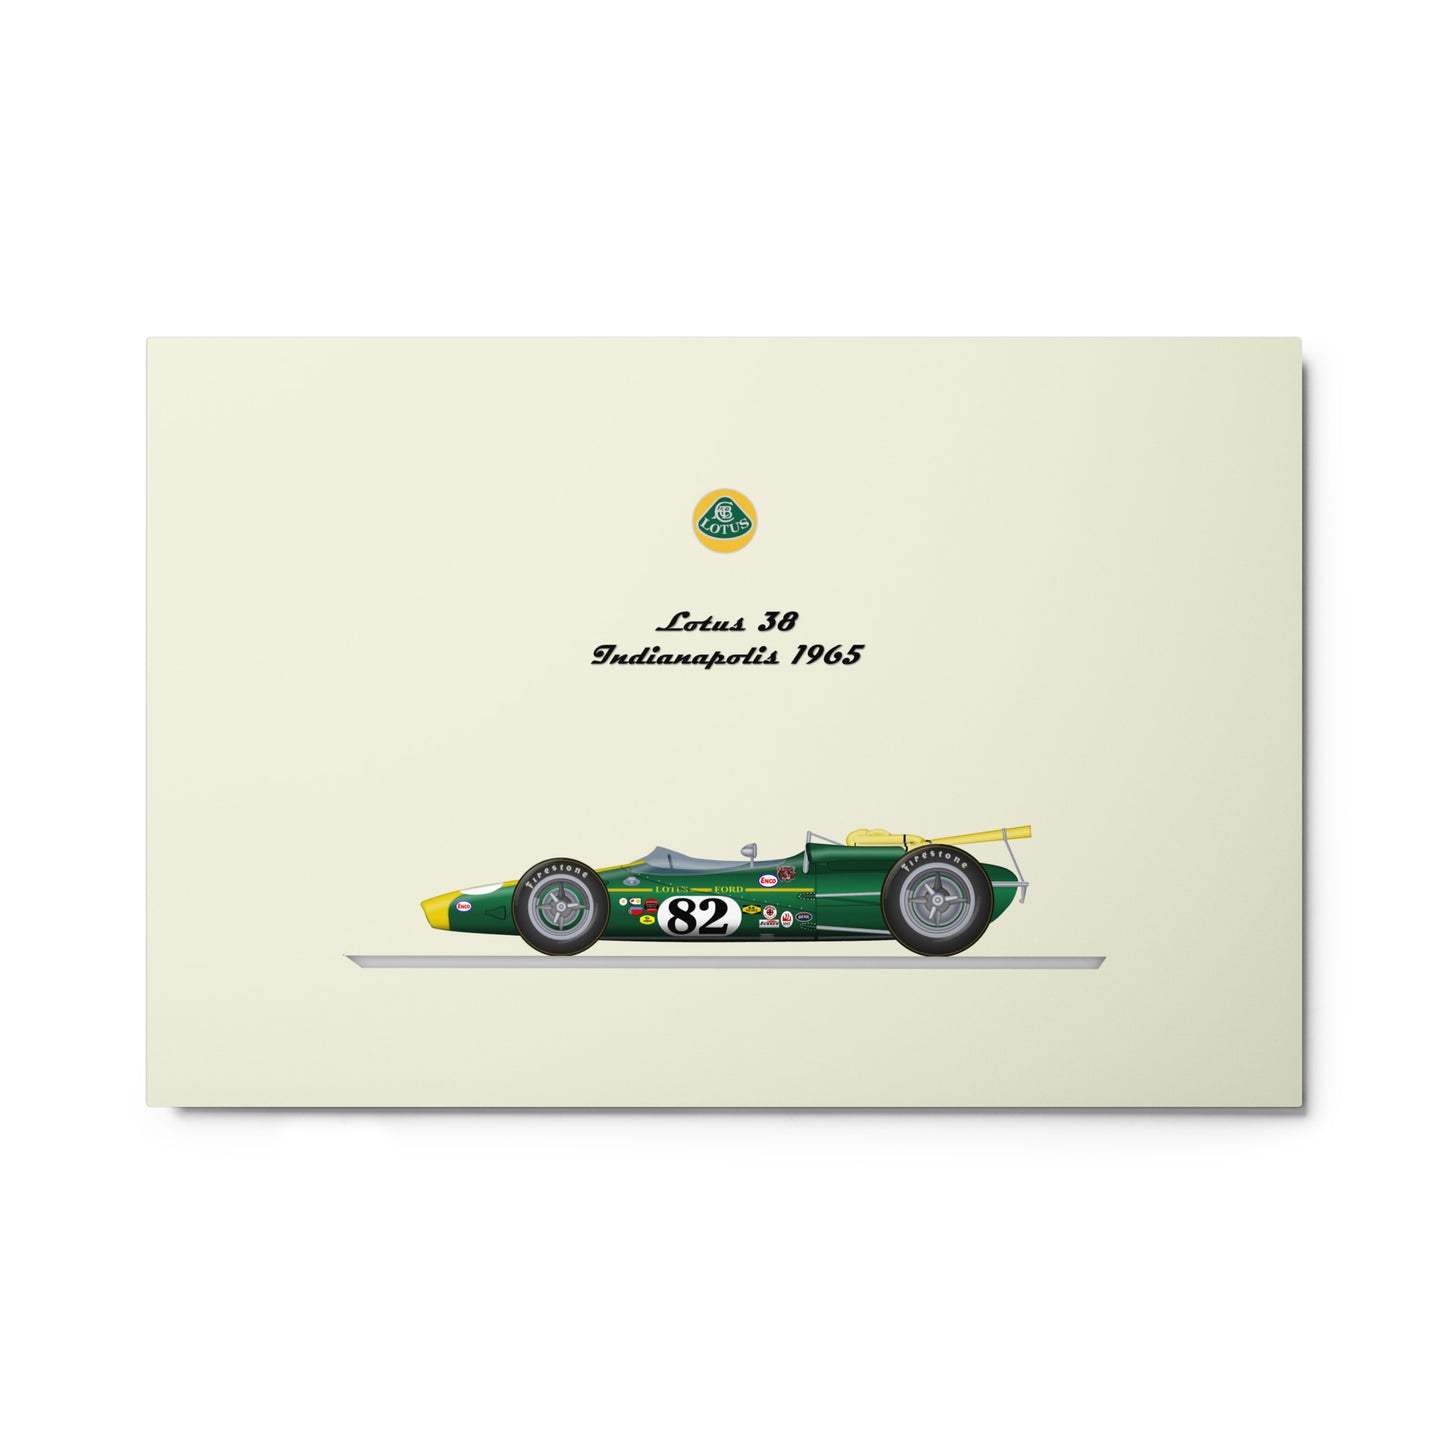 Car-Indycar-1965 Lotus 38 By Gianfranco Lanini